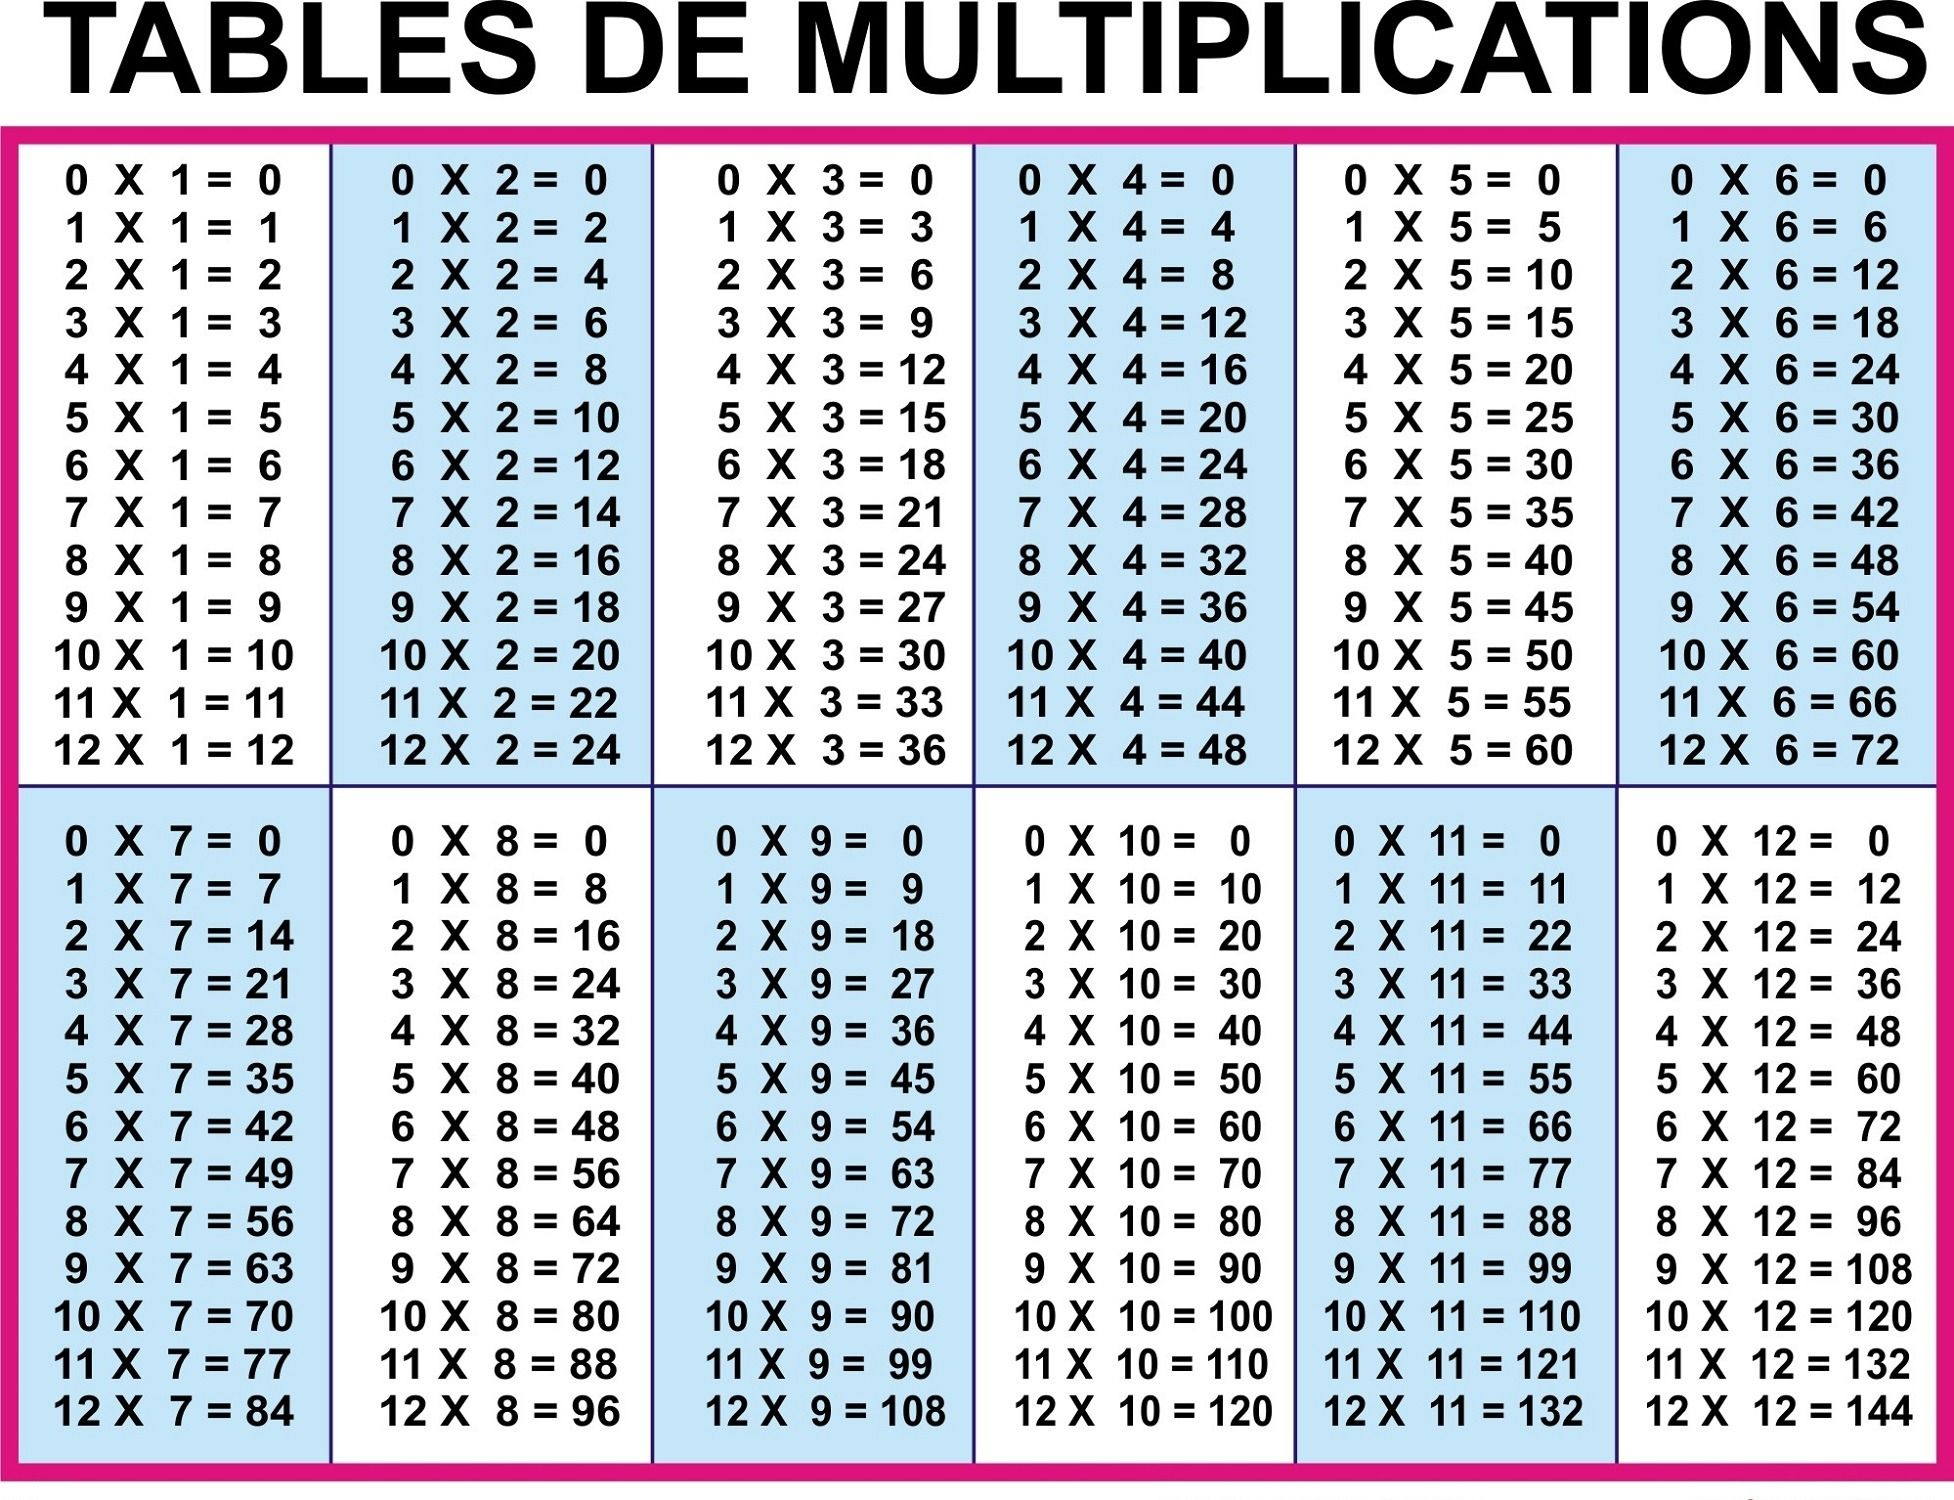 Times Table Chart 12 To 20 - Pflag